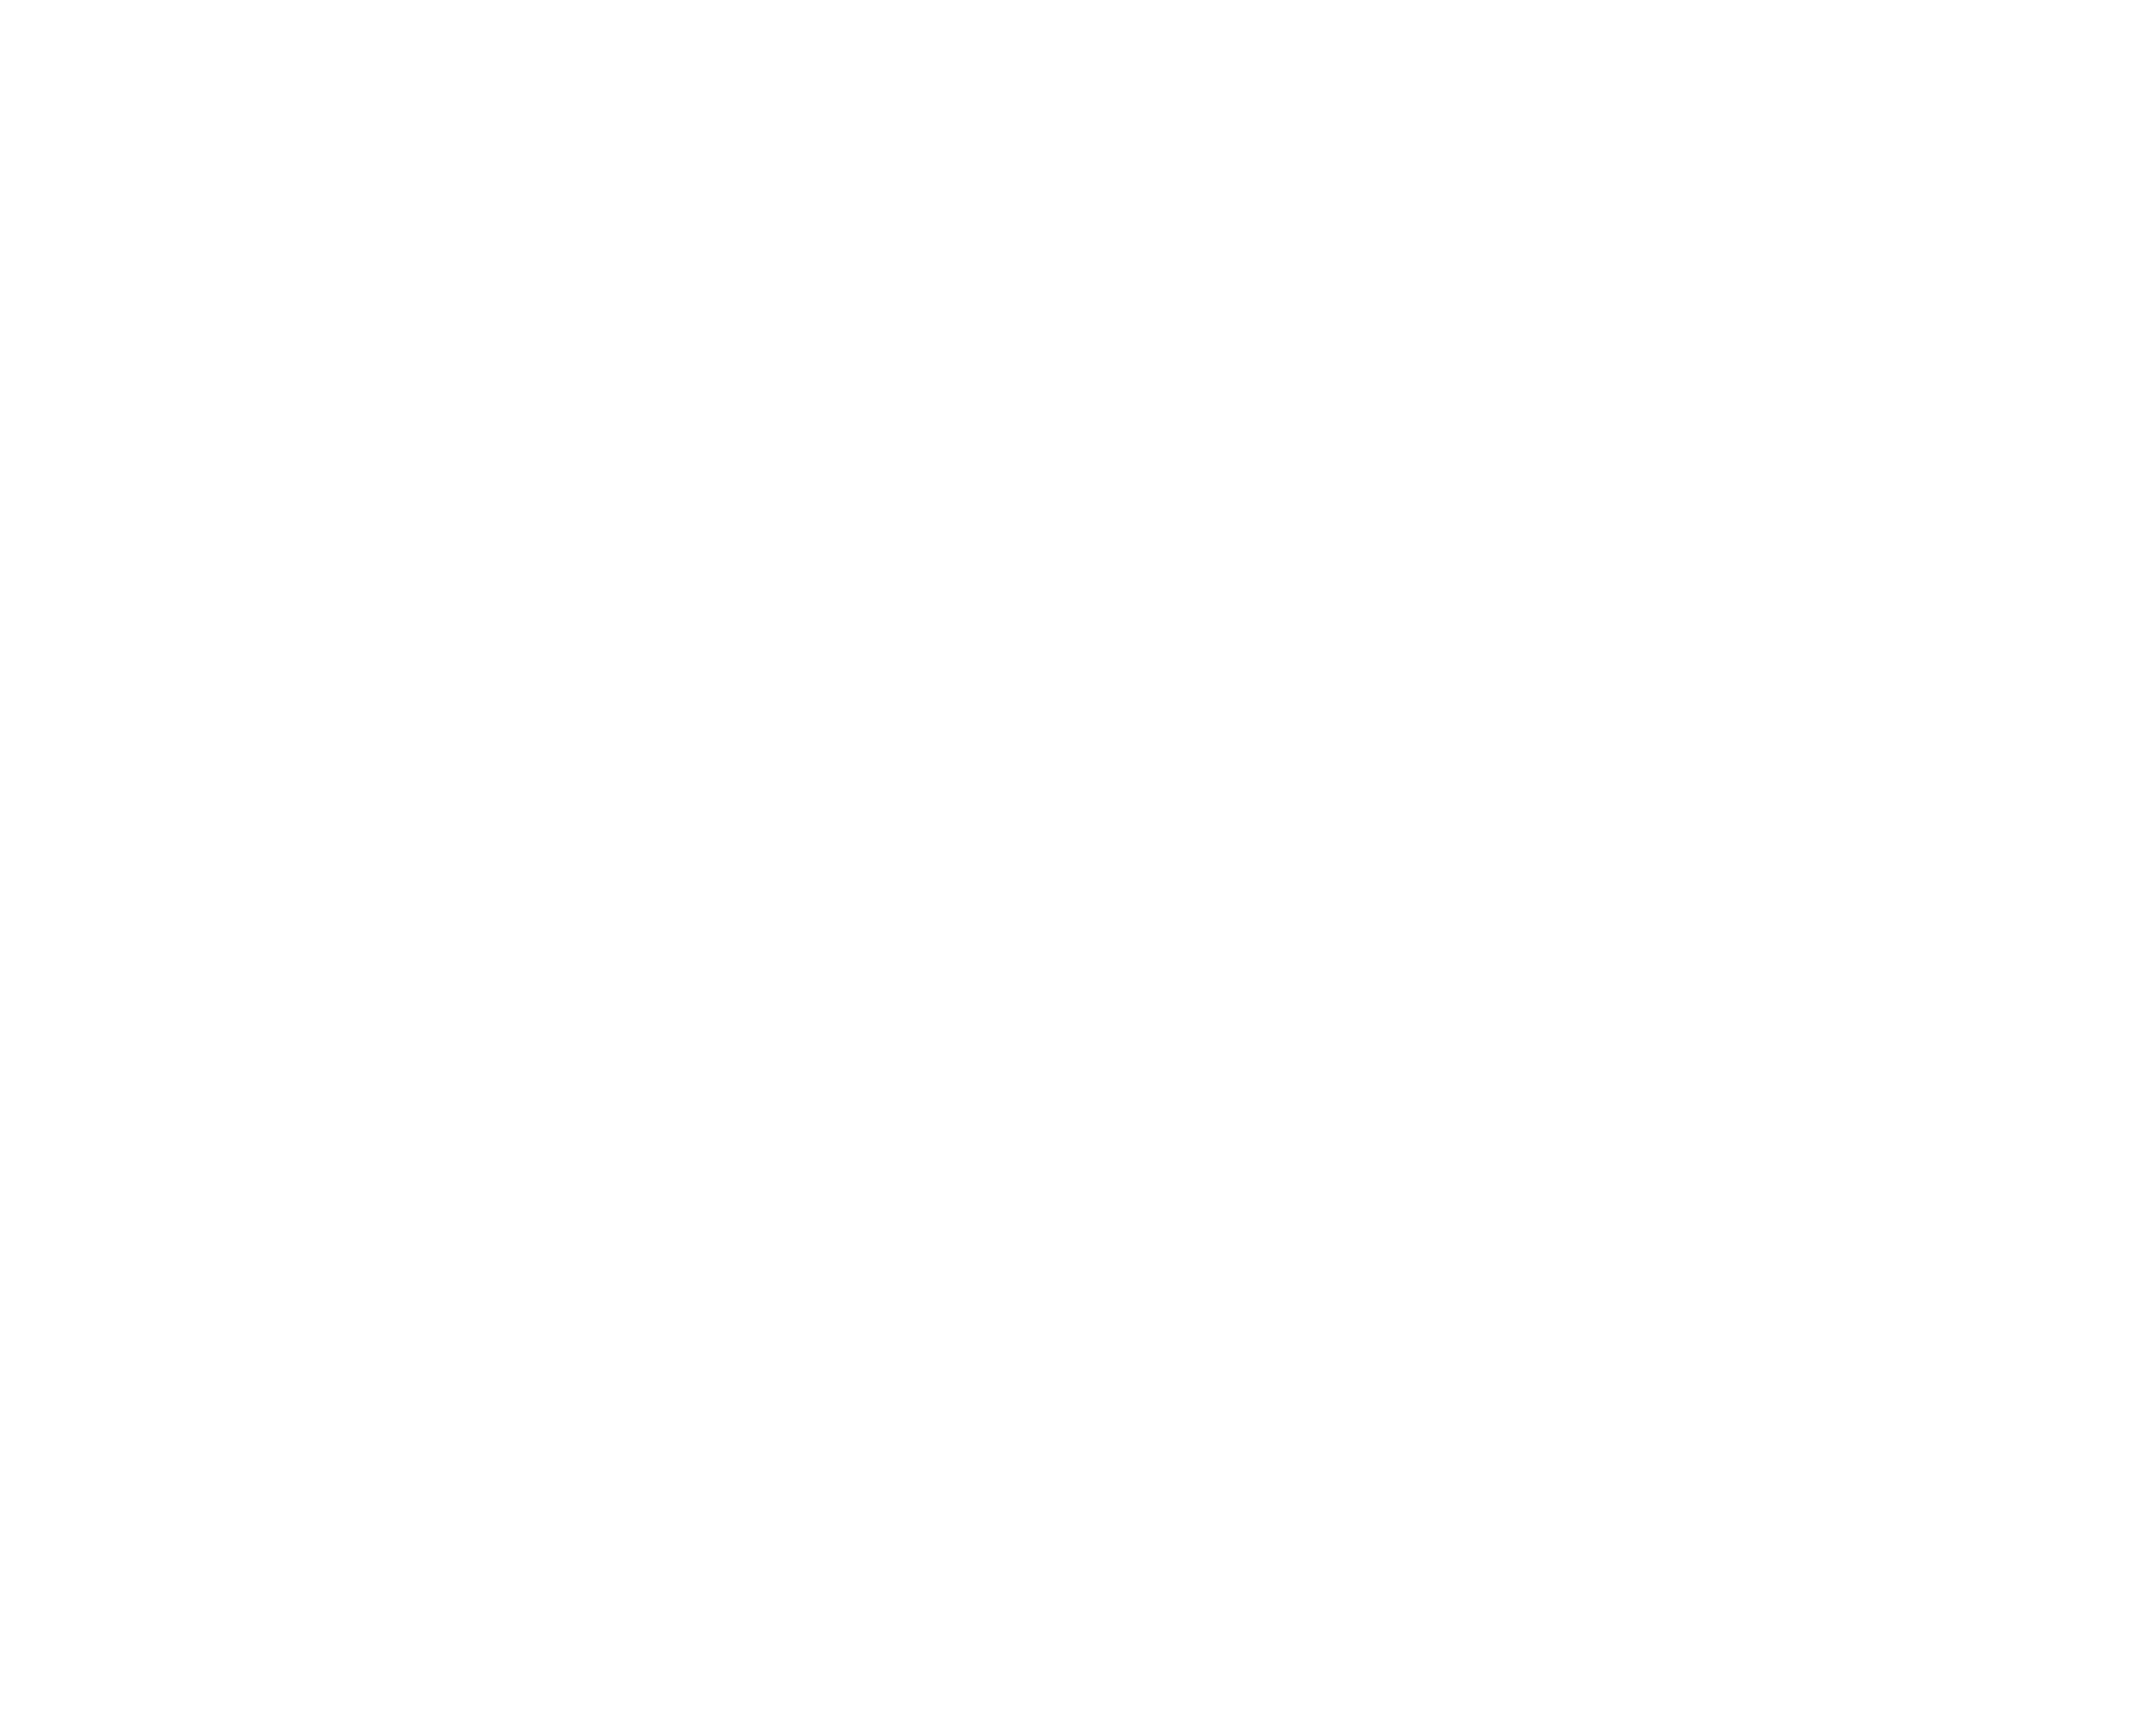 reshack